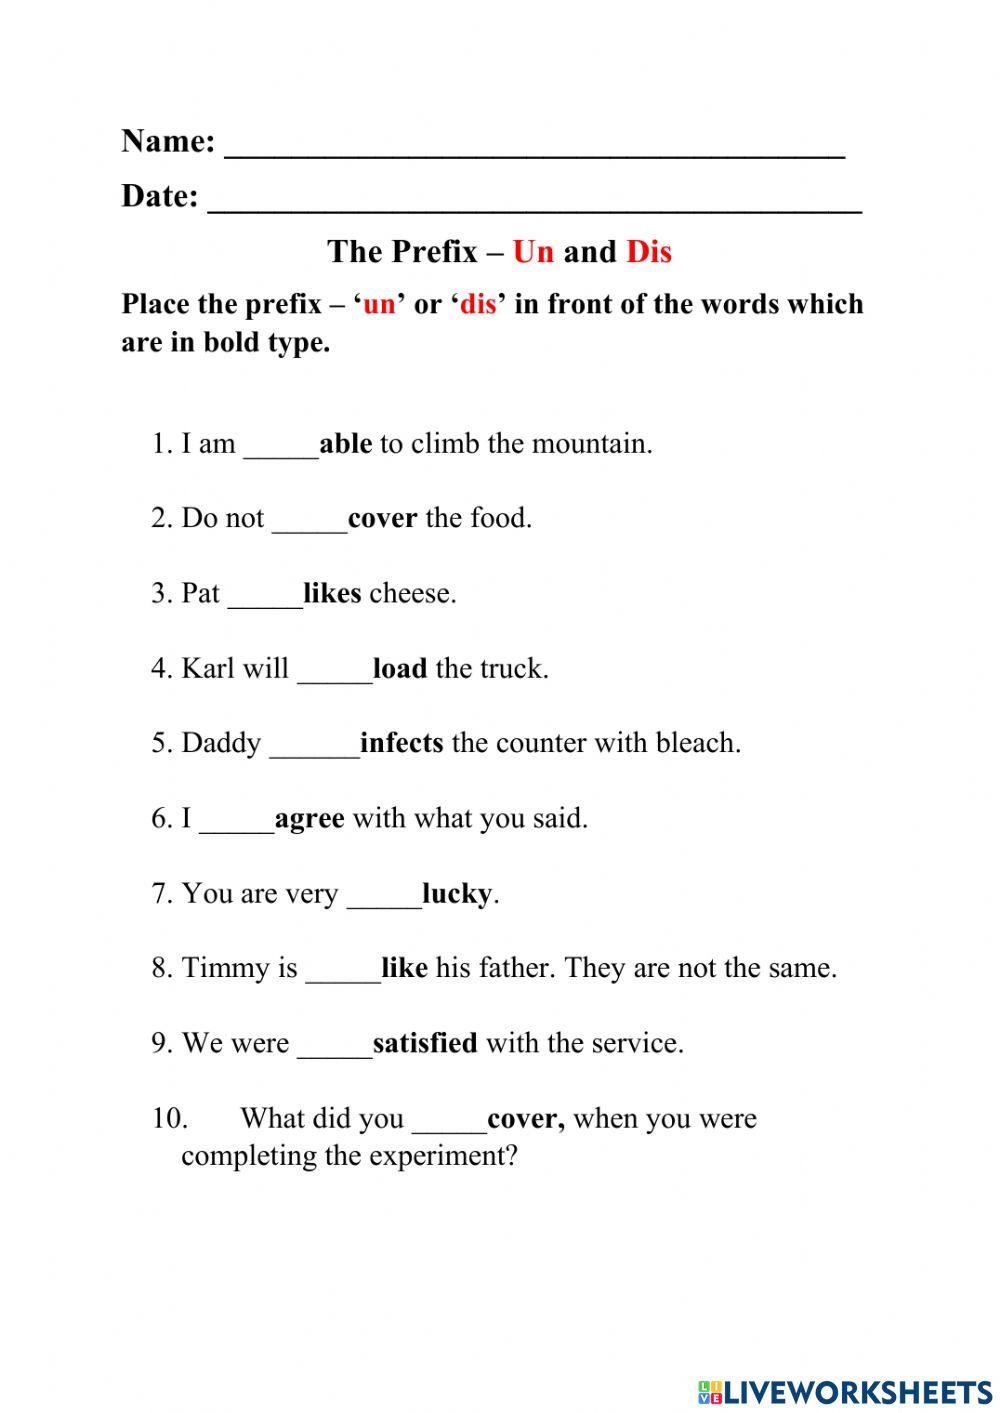 Prefixes - un and dis (ii)